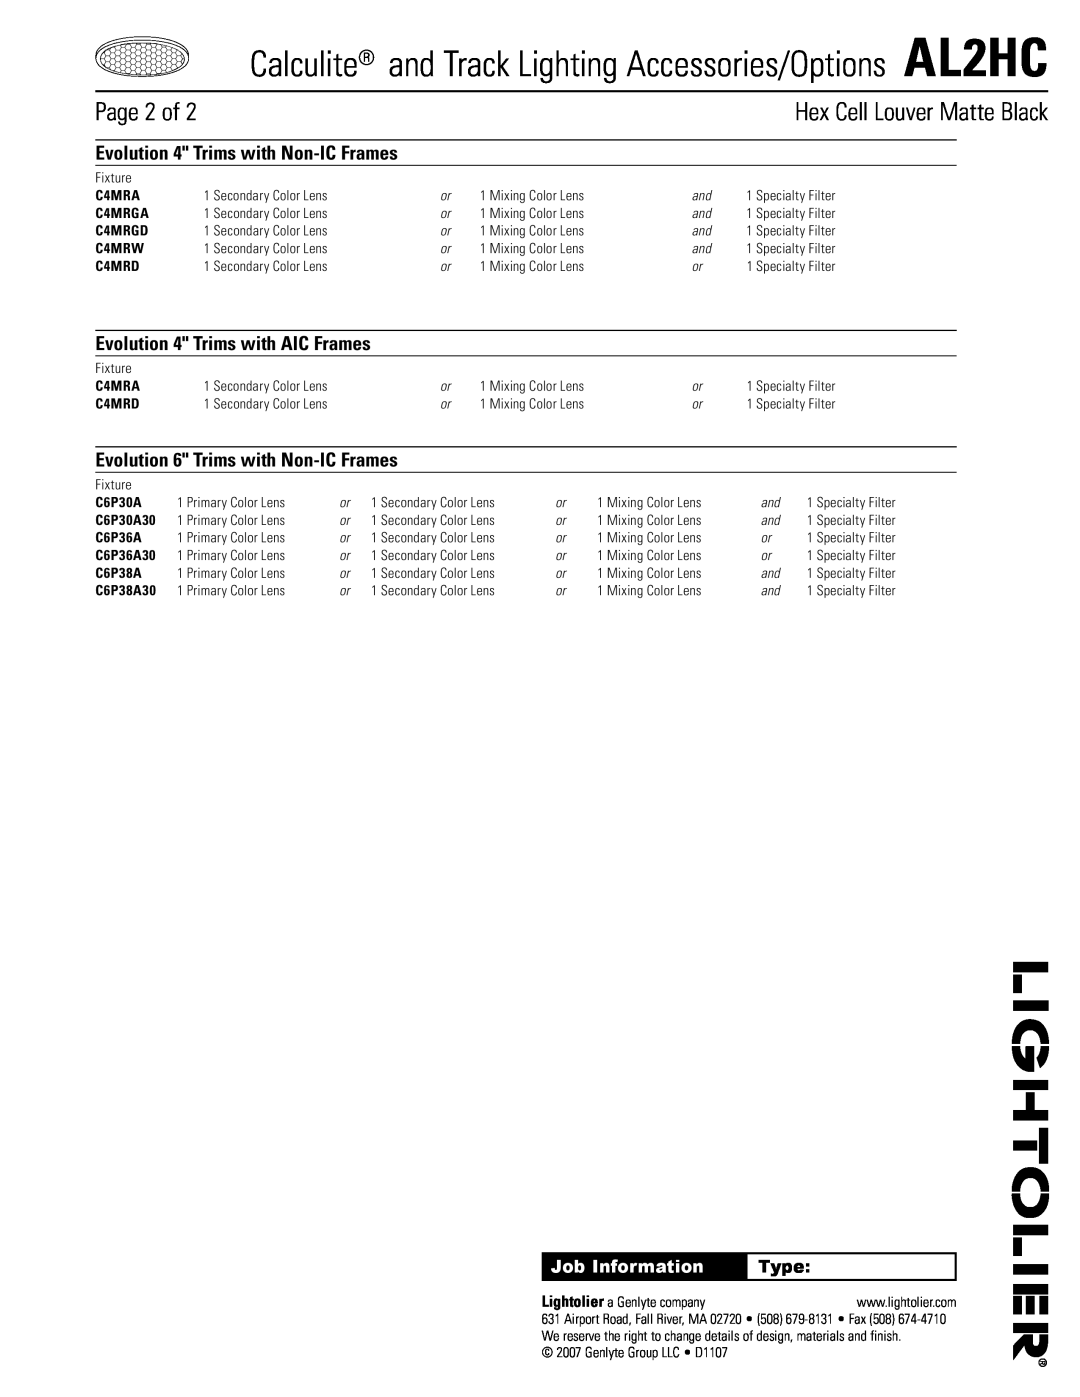 Lightolier AL2HC manual Page, Evolution 4 Trims with AIC Frames, Evolution 6 Trims with Non-ICFrames, Type, Job Information 